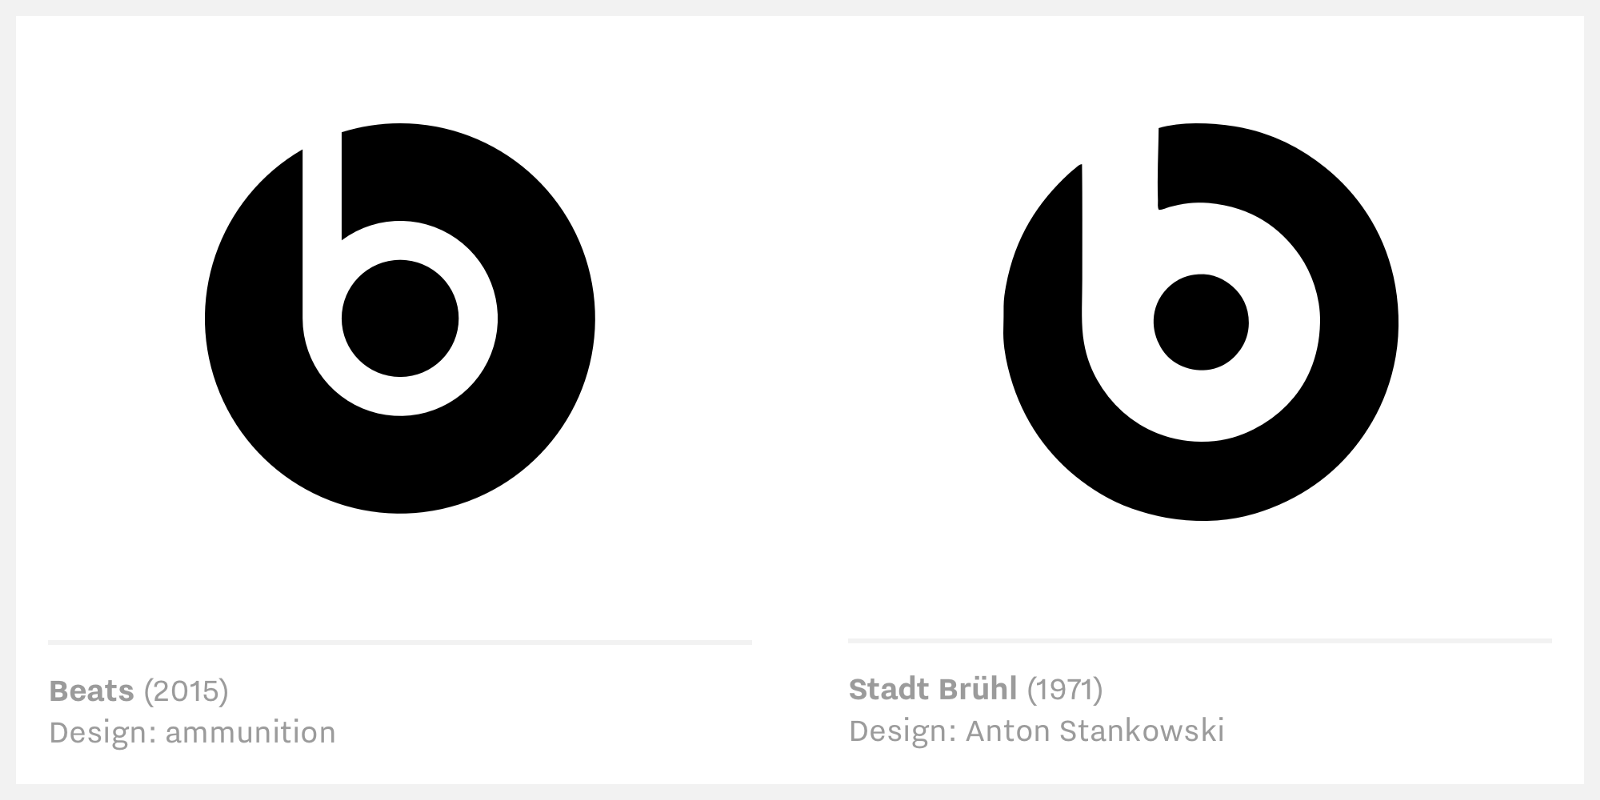 White Beats Logo - Your logo is copied